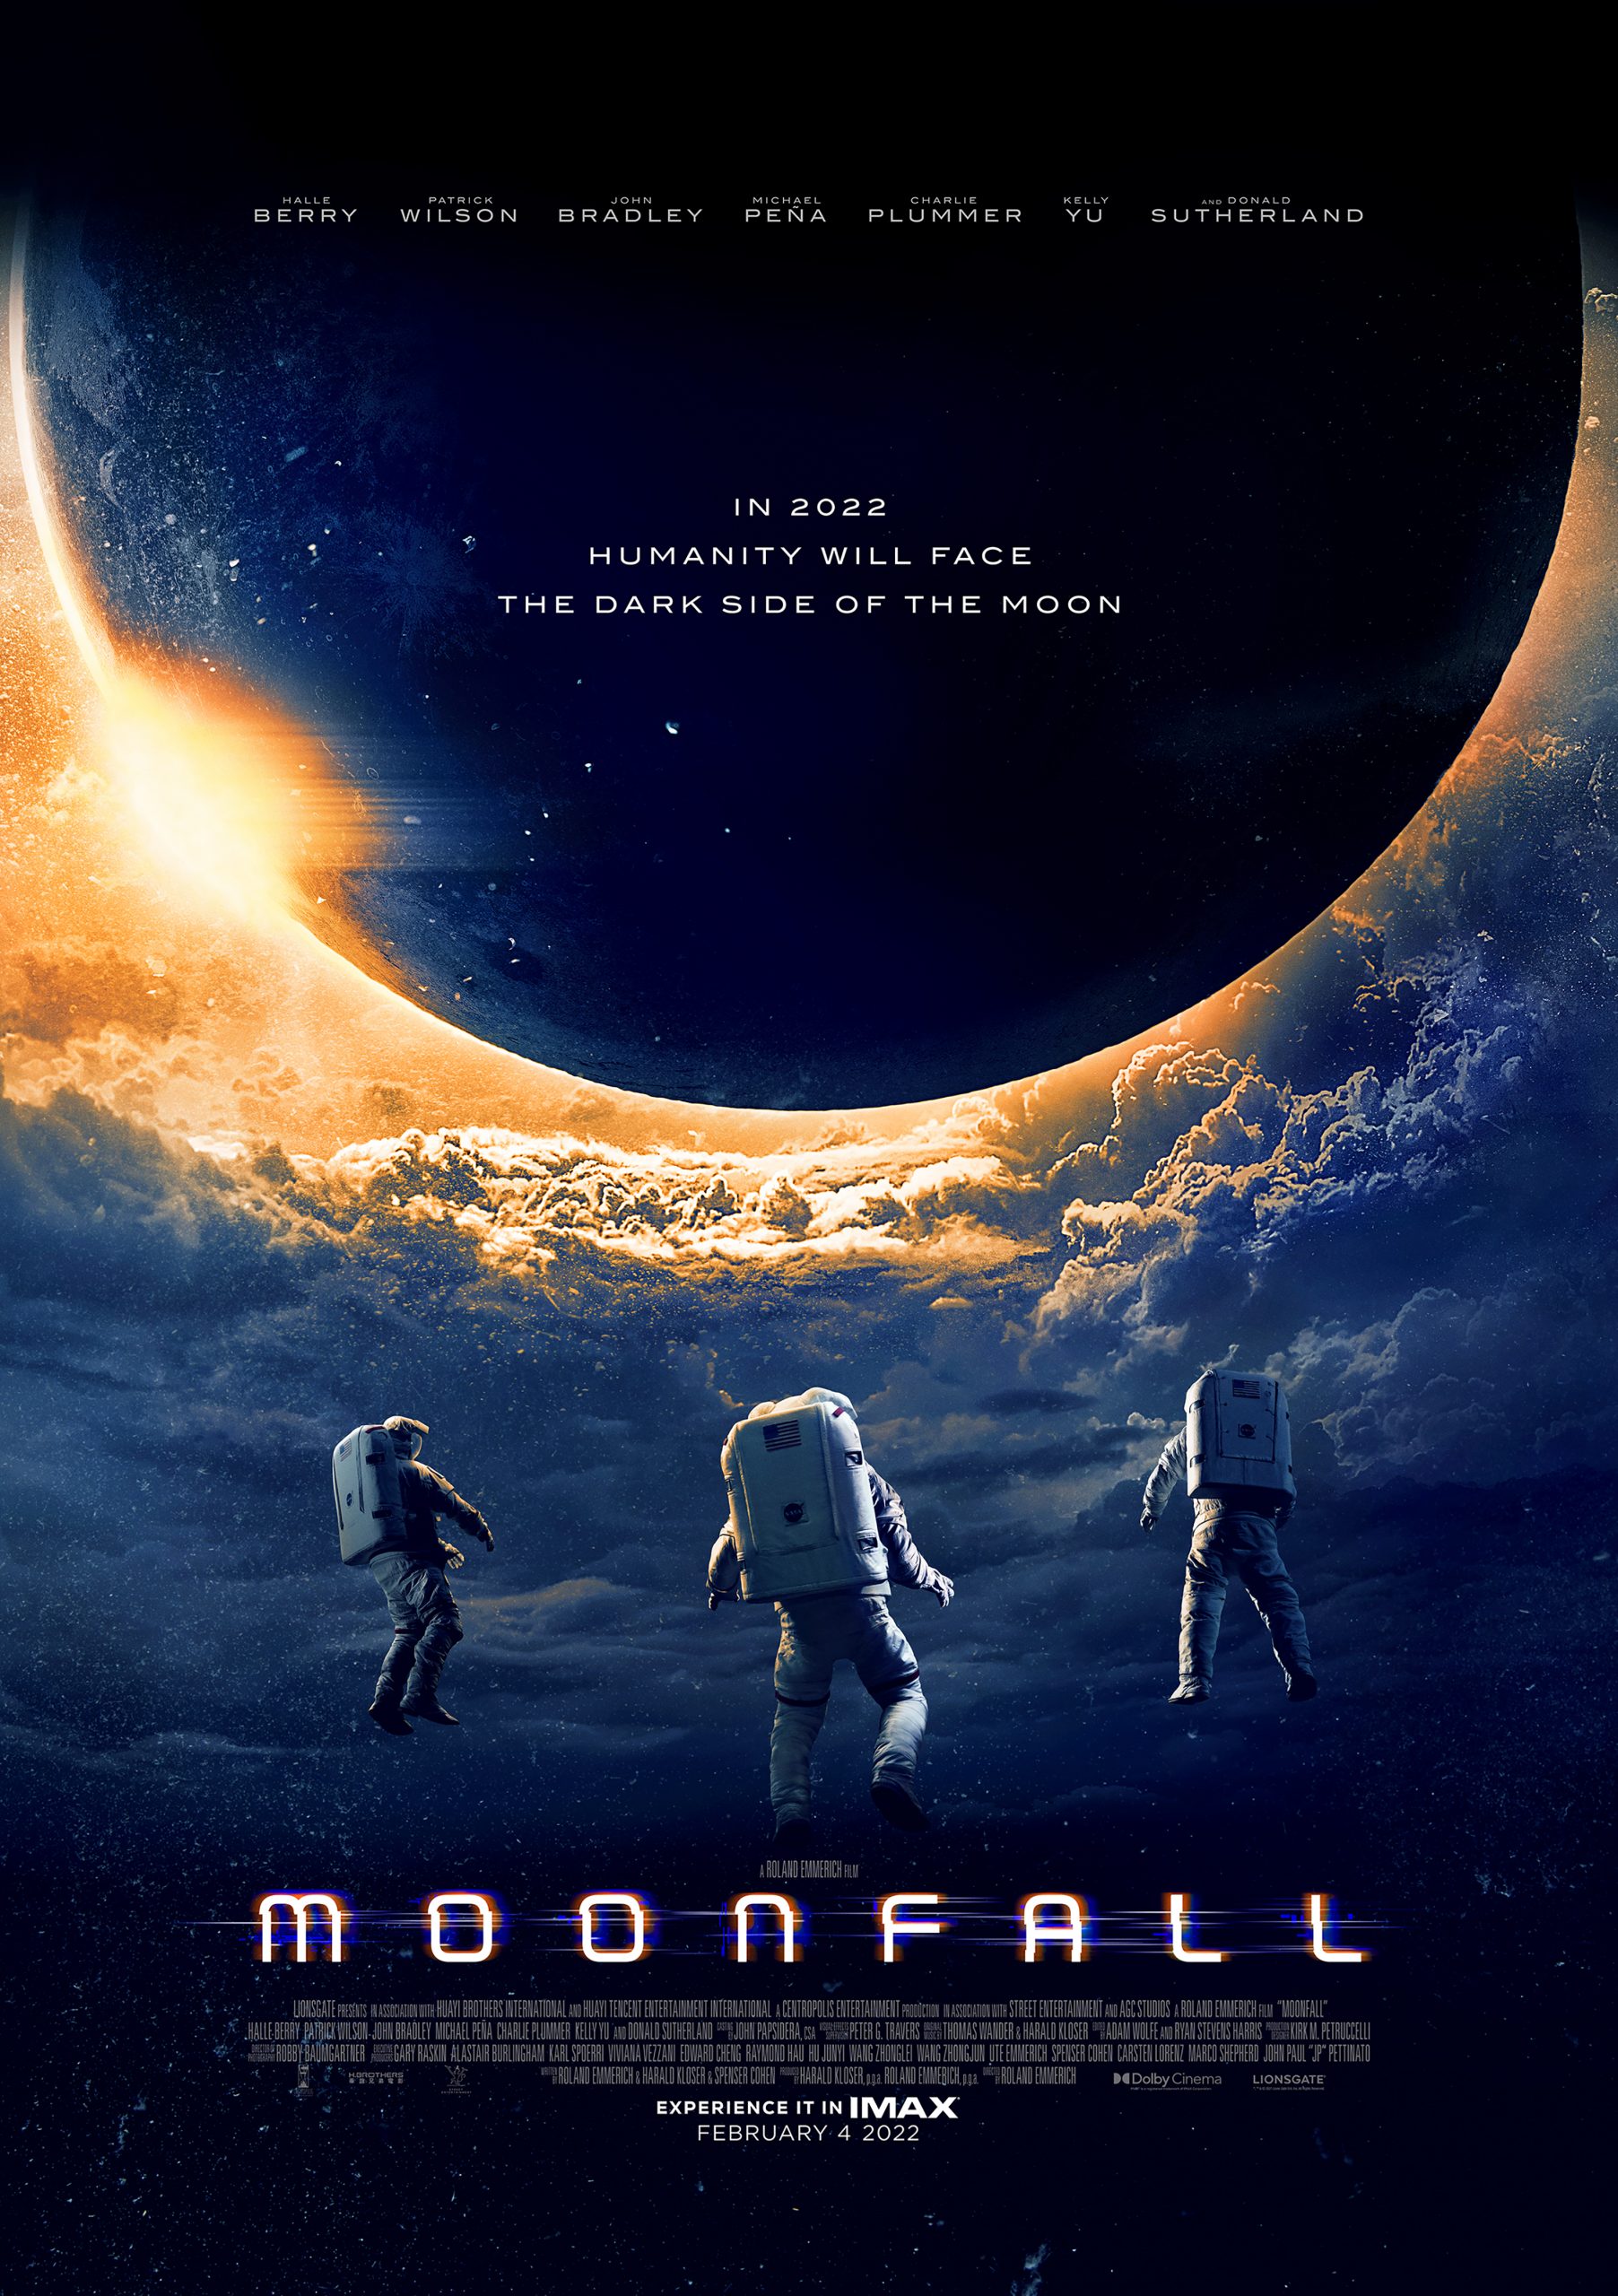 Moonfall วันวิบัติ จันทร์ถล่มโลก (2022)